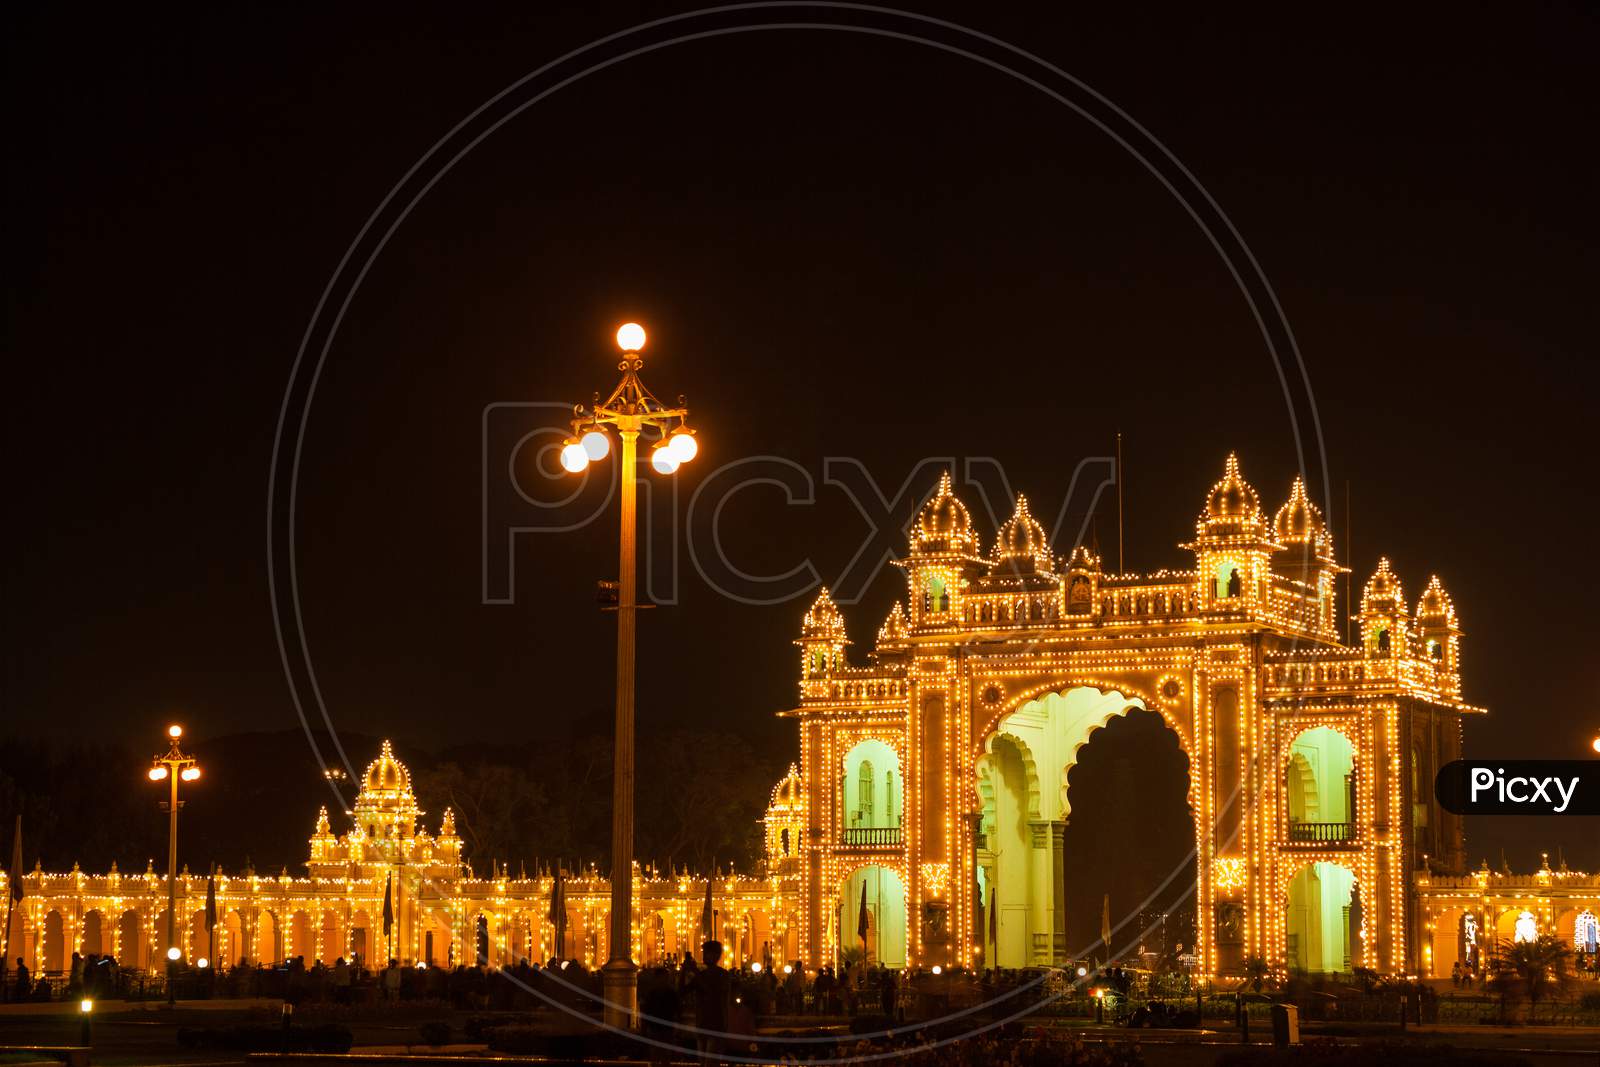 An illuminated Mysore Ambavilas Palace entrance in Karnataka/India.